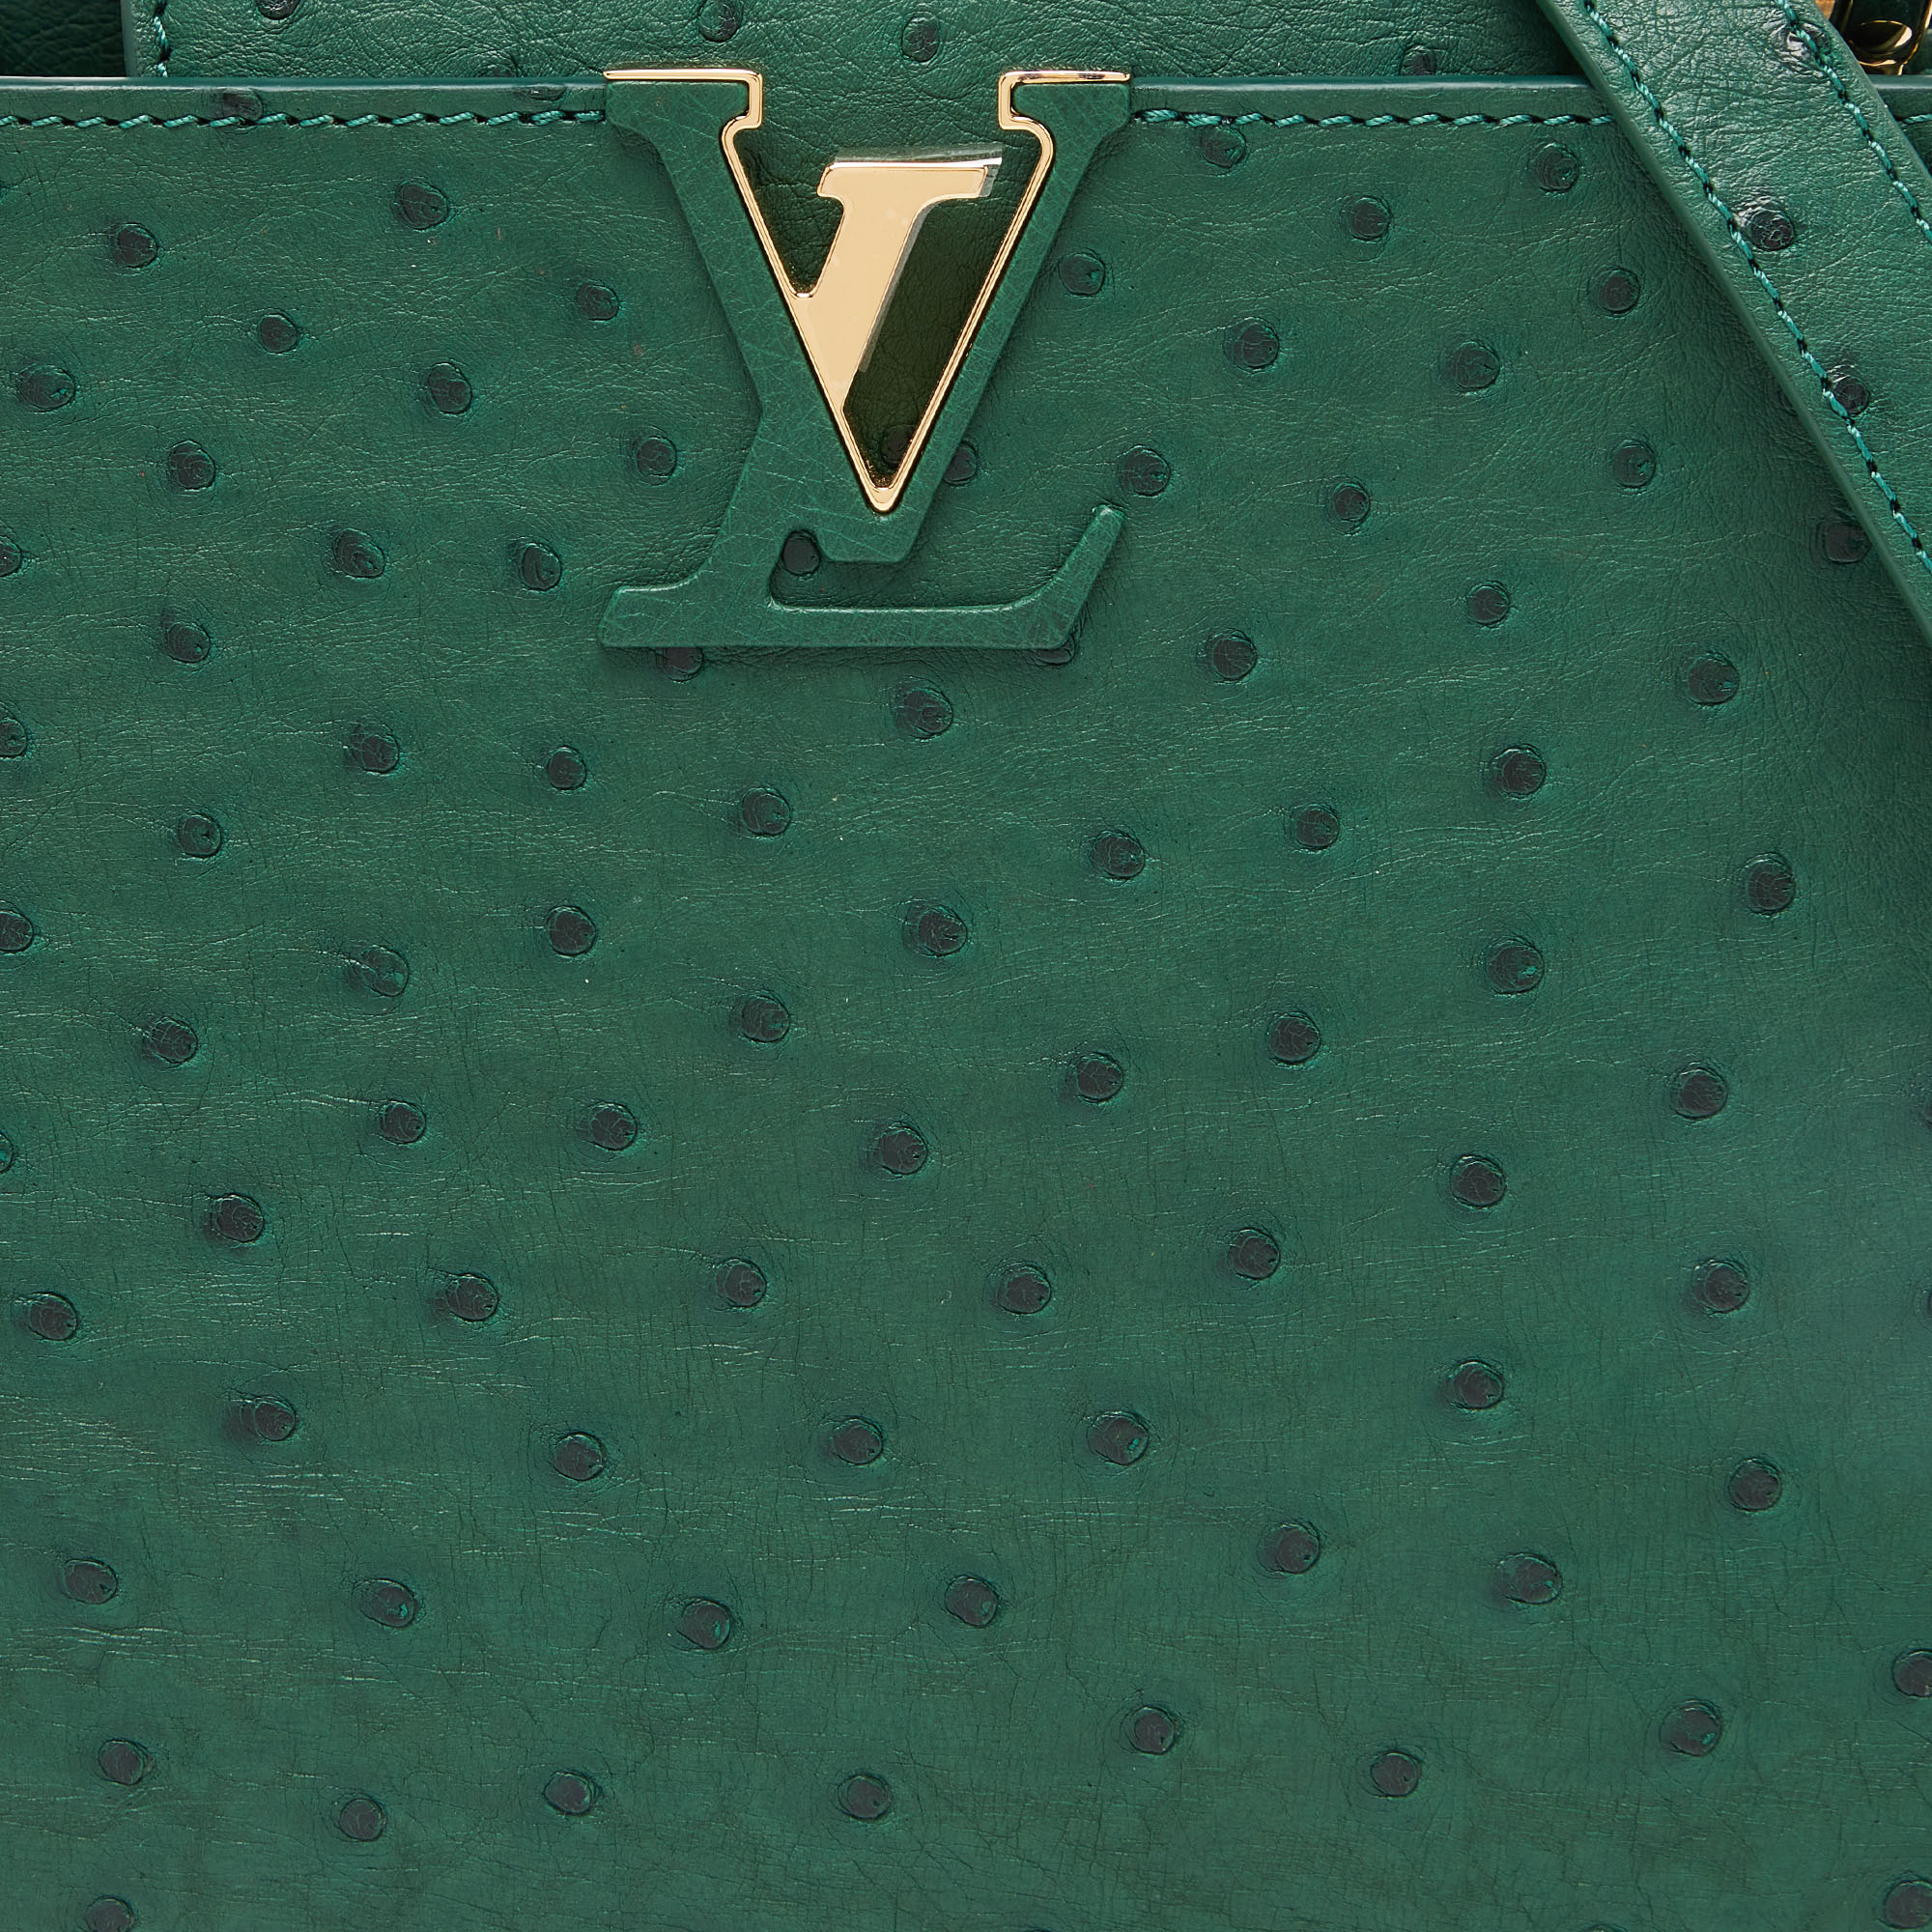 Louis Vuitton Green Ostrich Leather Capucines BB Bag